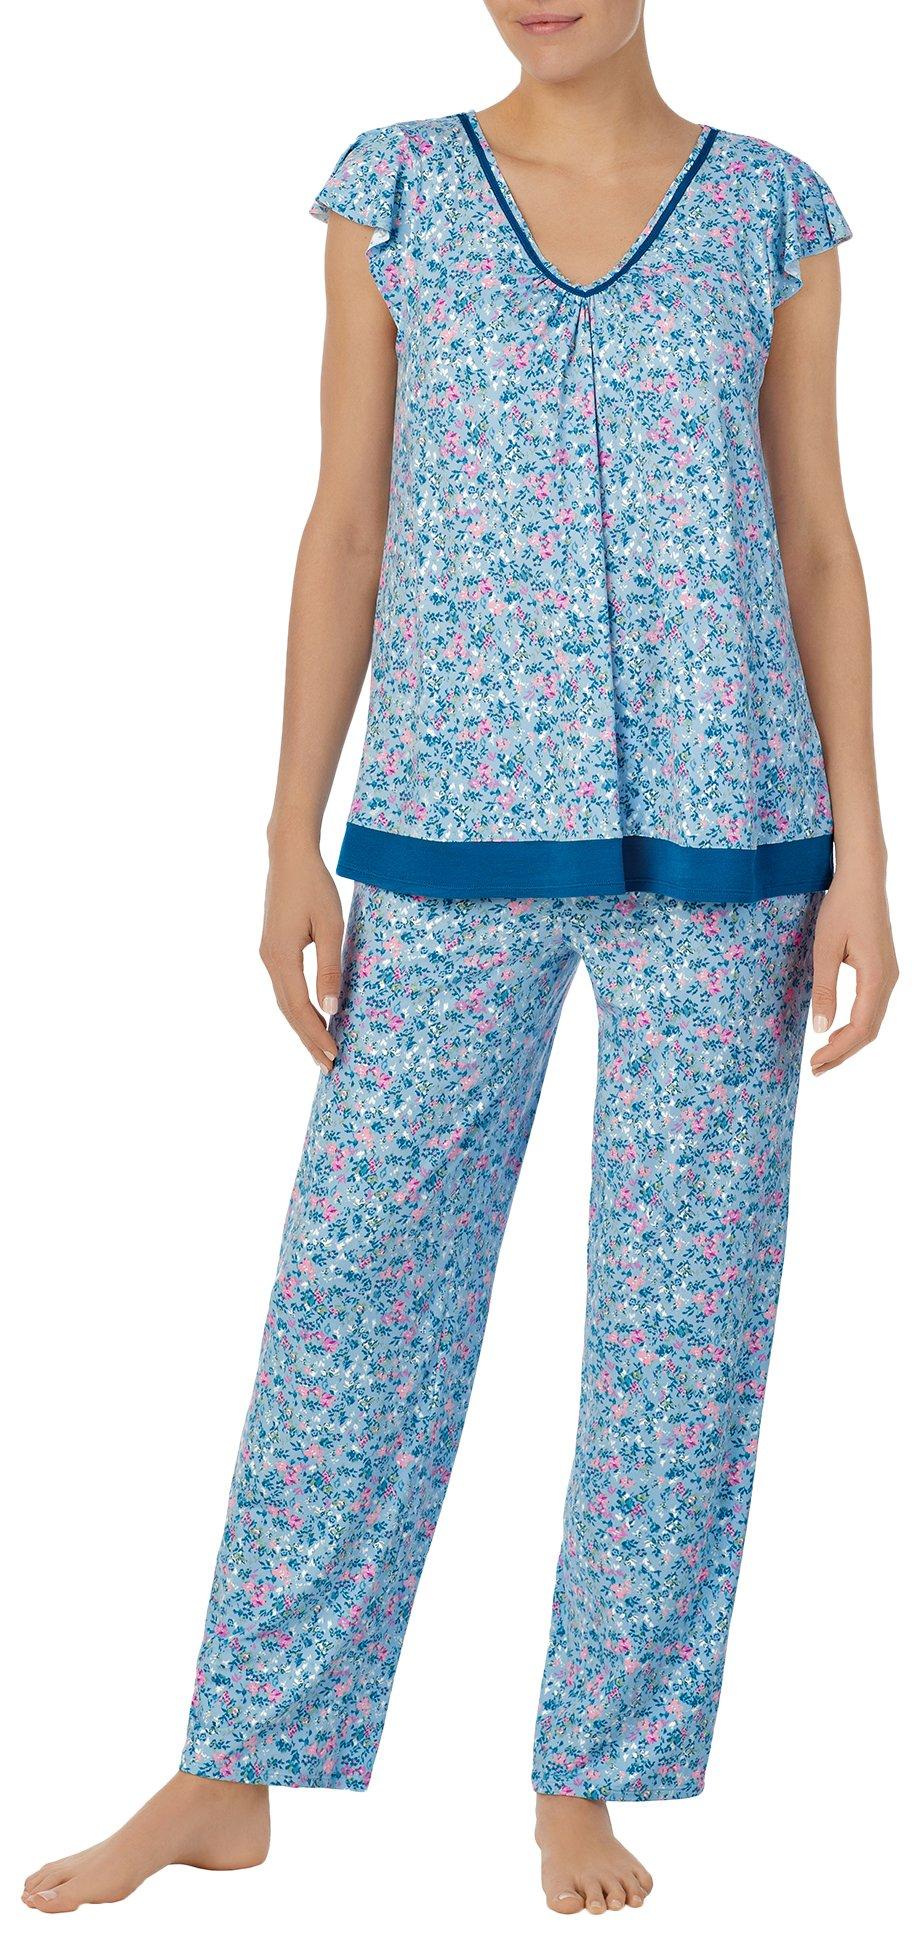 Ellen Tracy Womens 2-Pc. Floral Top & Pants Sleep Set